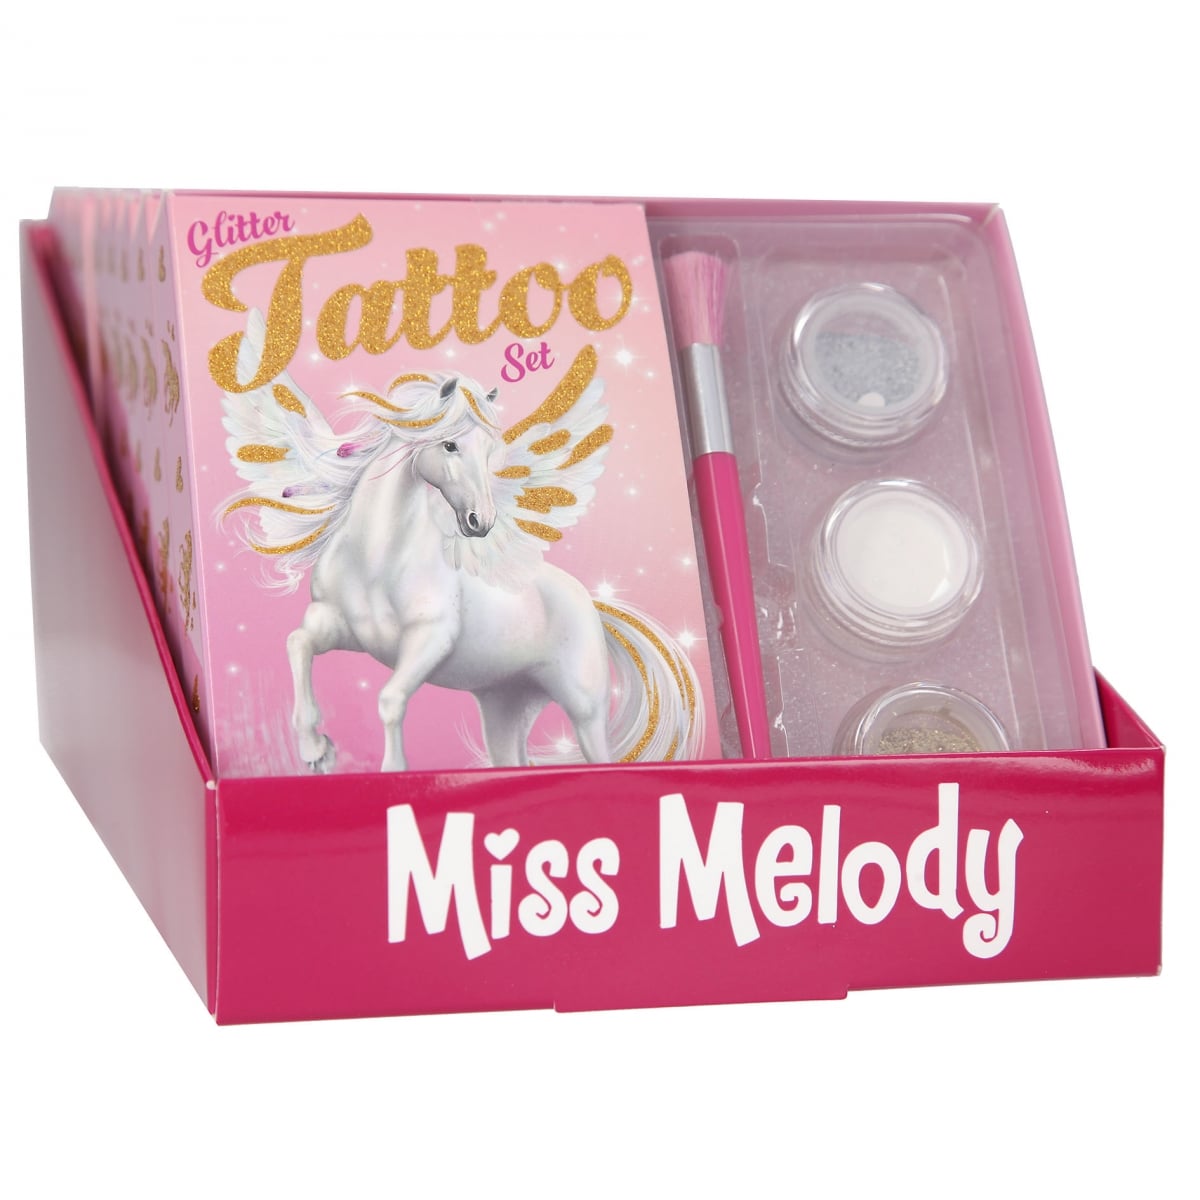 Autonom Stilk skarpt Depesche Miss Melody Glitzer Tattoo Set - Postmeier.shop